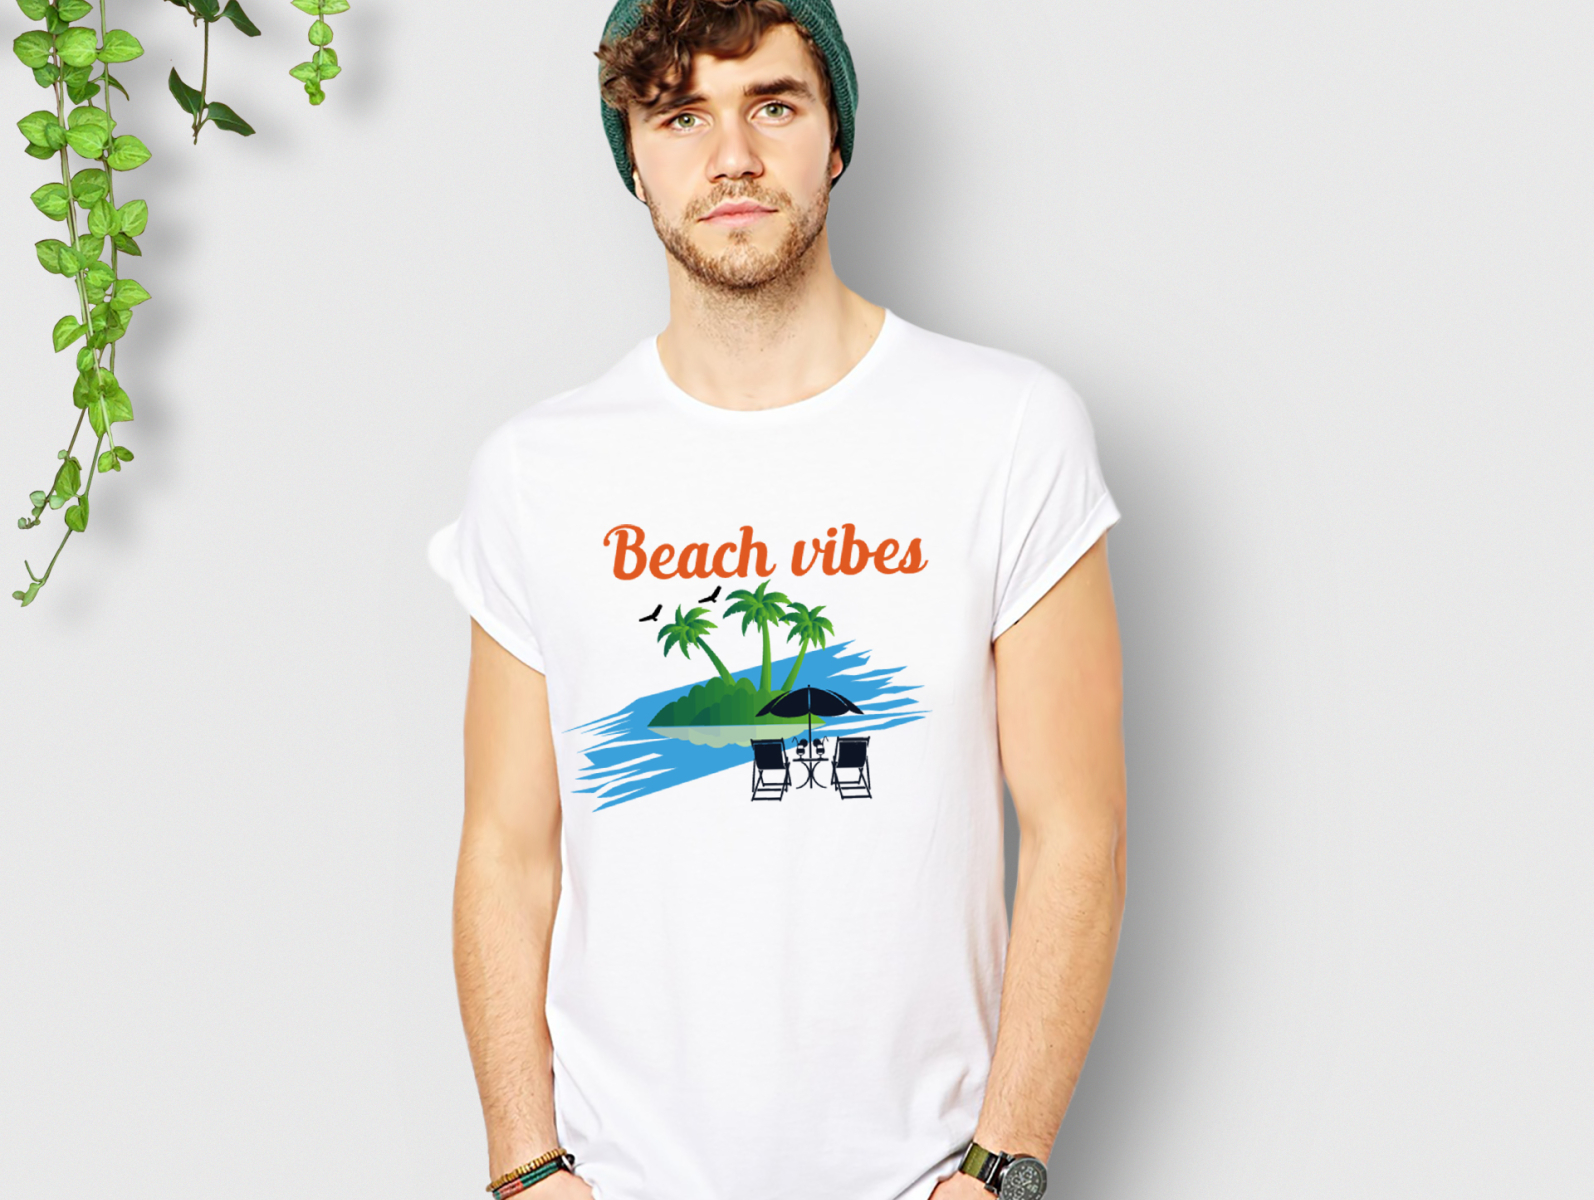 Summer/Beach Tshirt Design by Rayhan Hasan on Dribbble